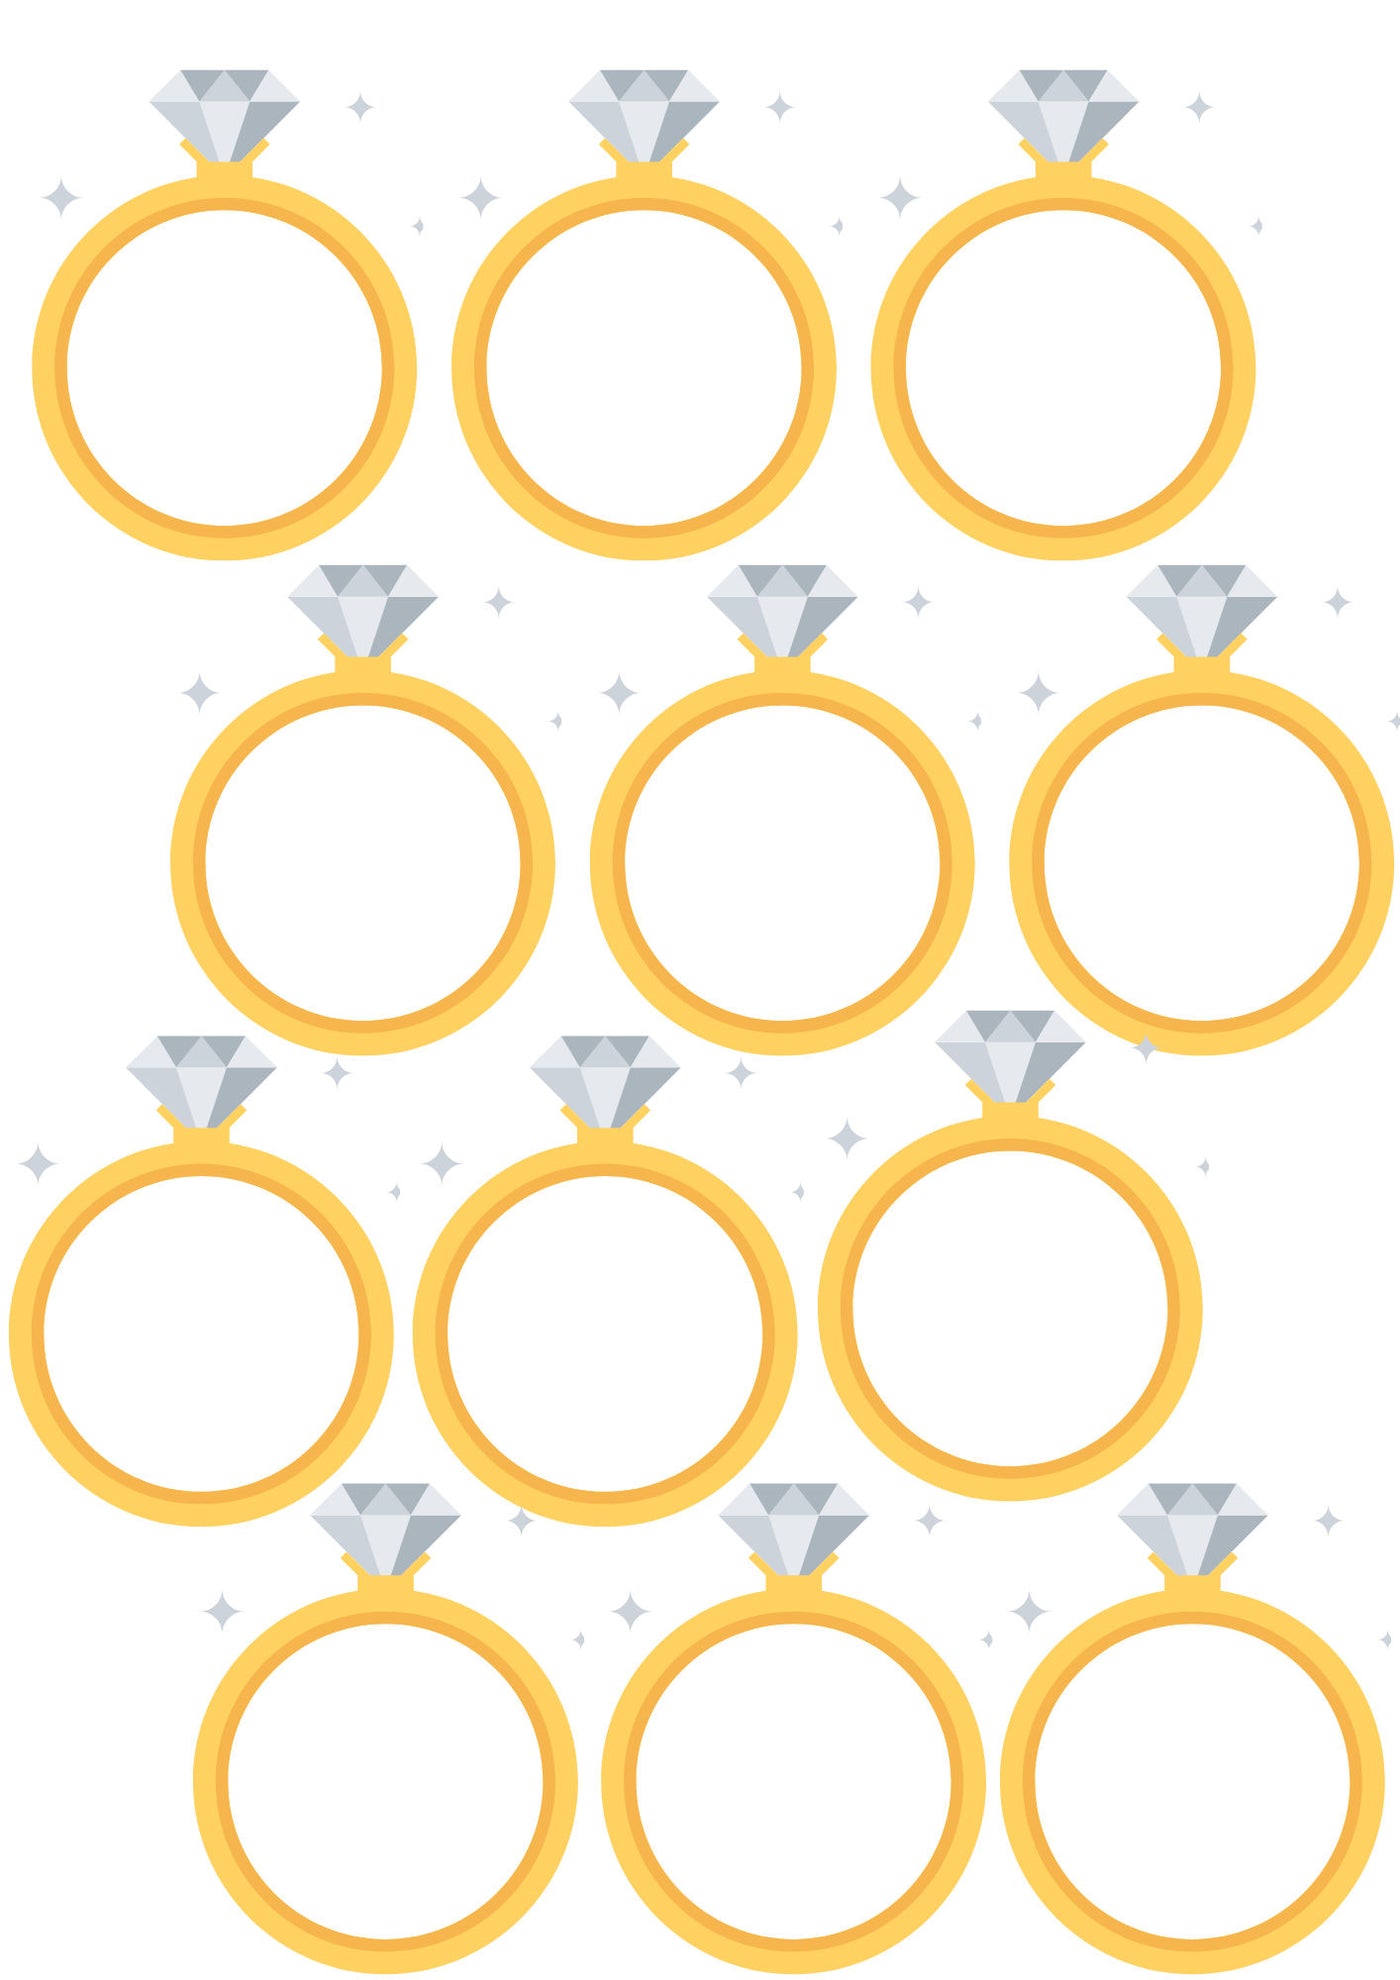 Pin The Ring- Bridal/Engagement Game